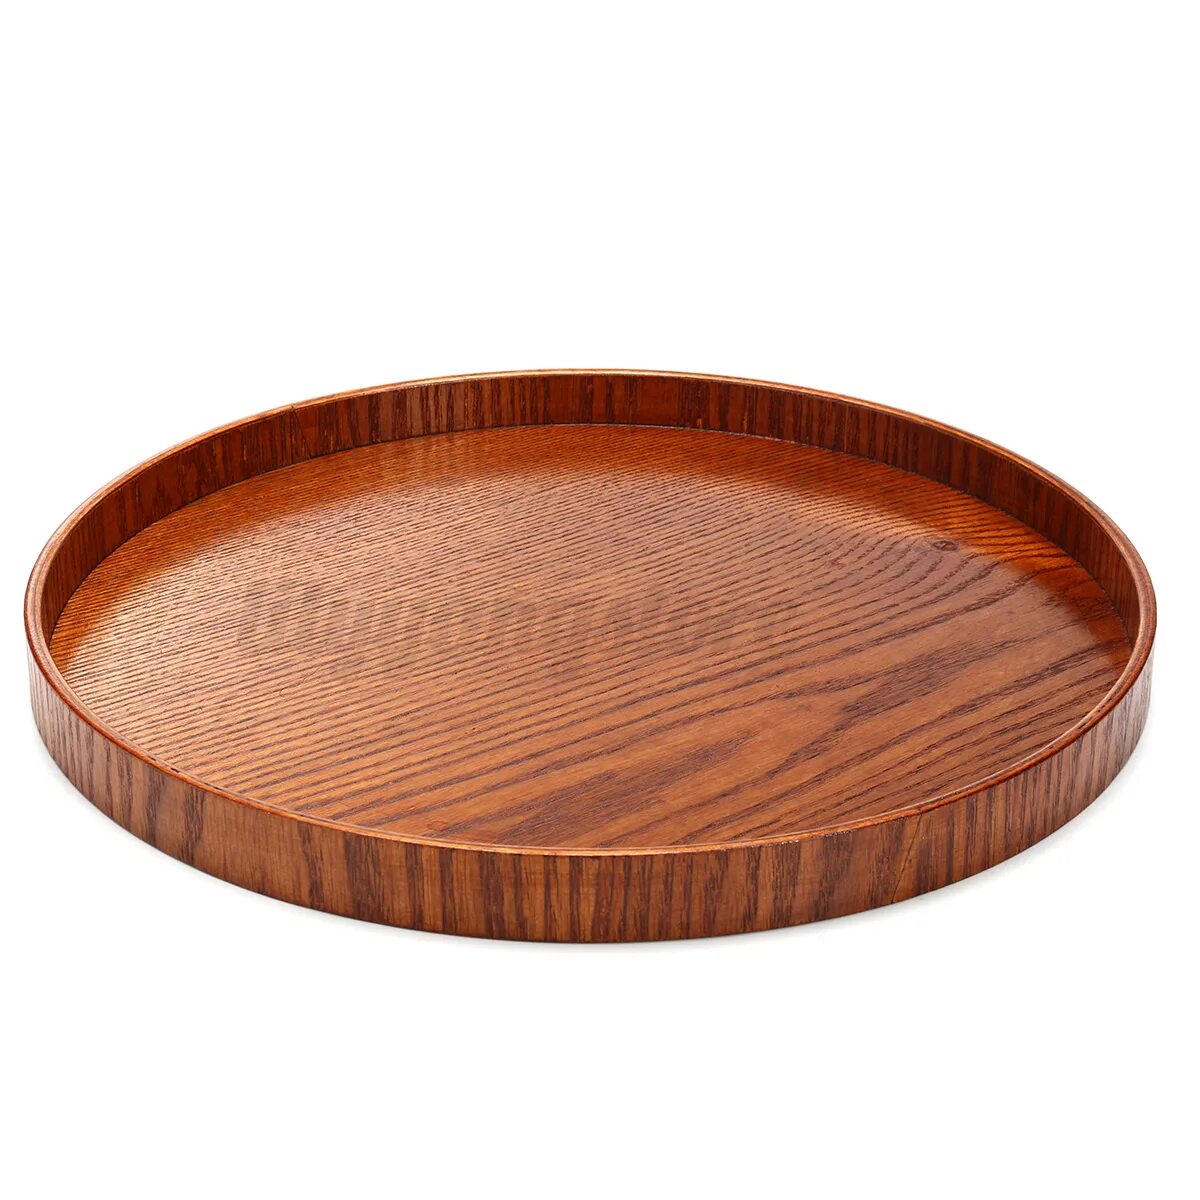 Fretta round. Поднос сверху. Wooden Plate. Round Wood Tray. Упаковка Wooden Tray 1000*3000.